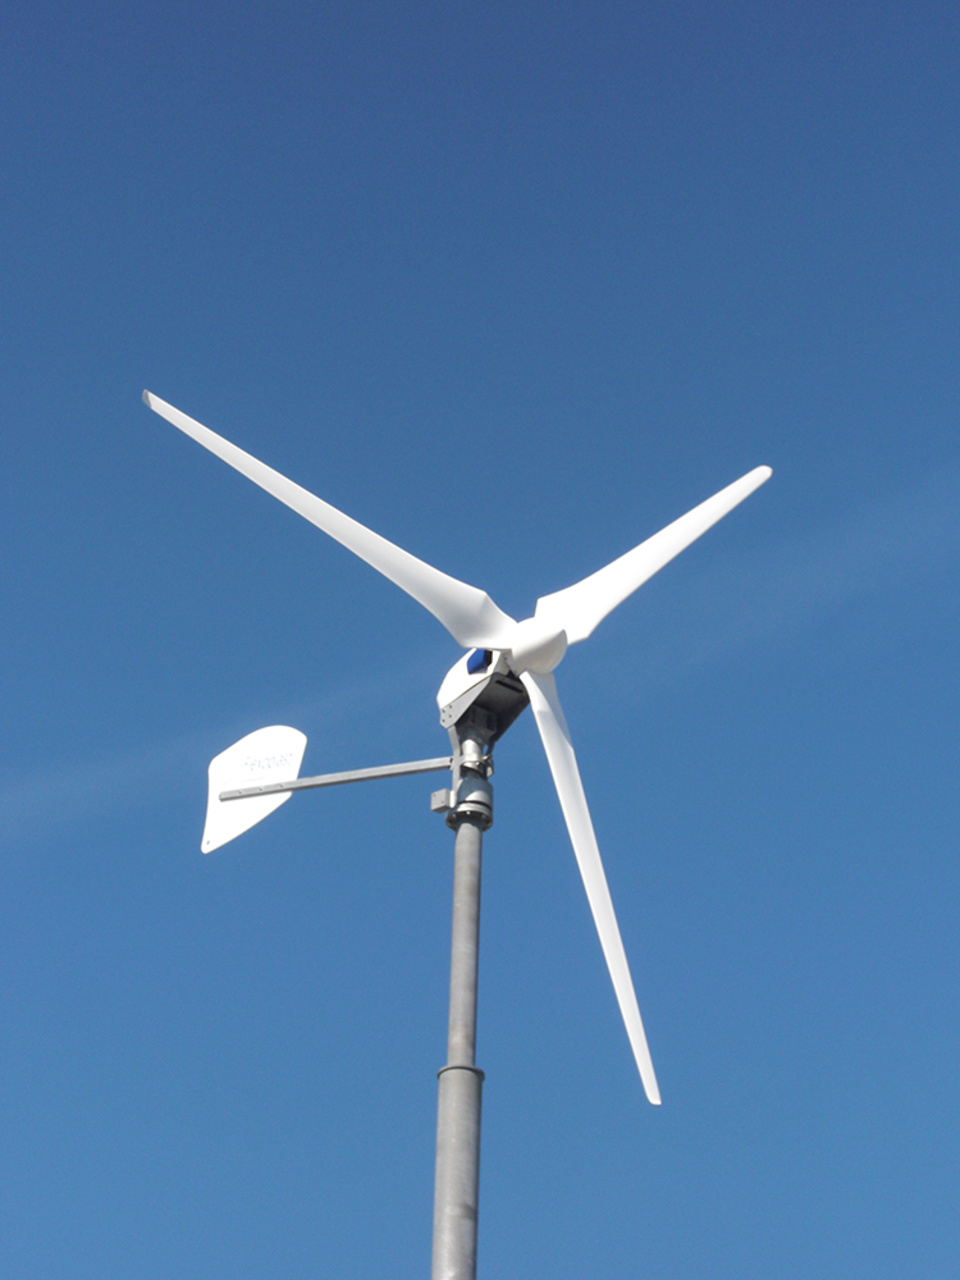 Windkraft2 bei DS Haustechnik GmbH in Wiesbaden